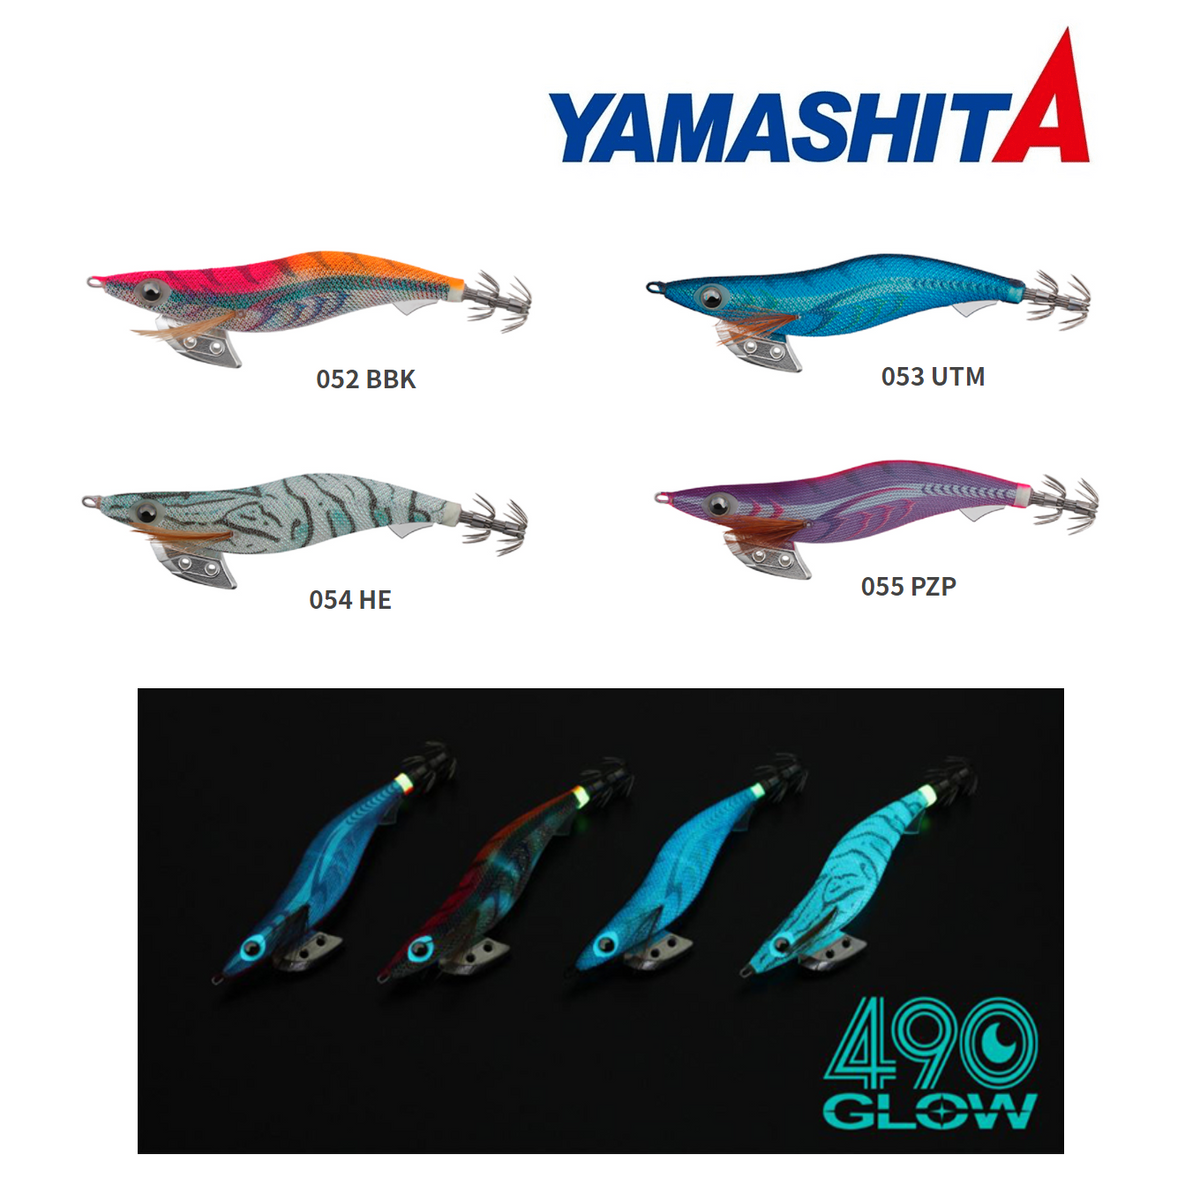 Yamashita Egi-Oh K 490GLOW Squid Jig Size #2.5